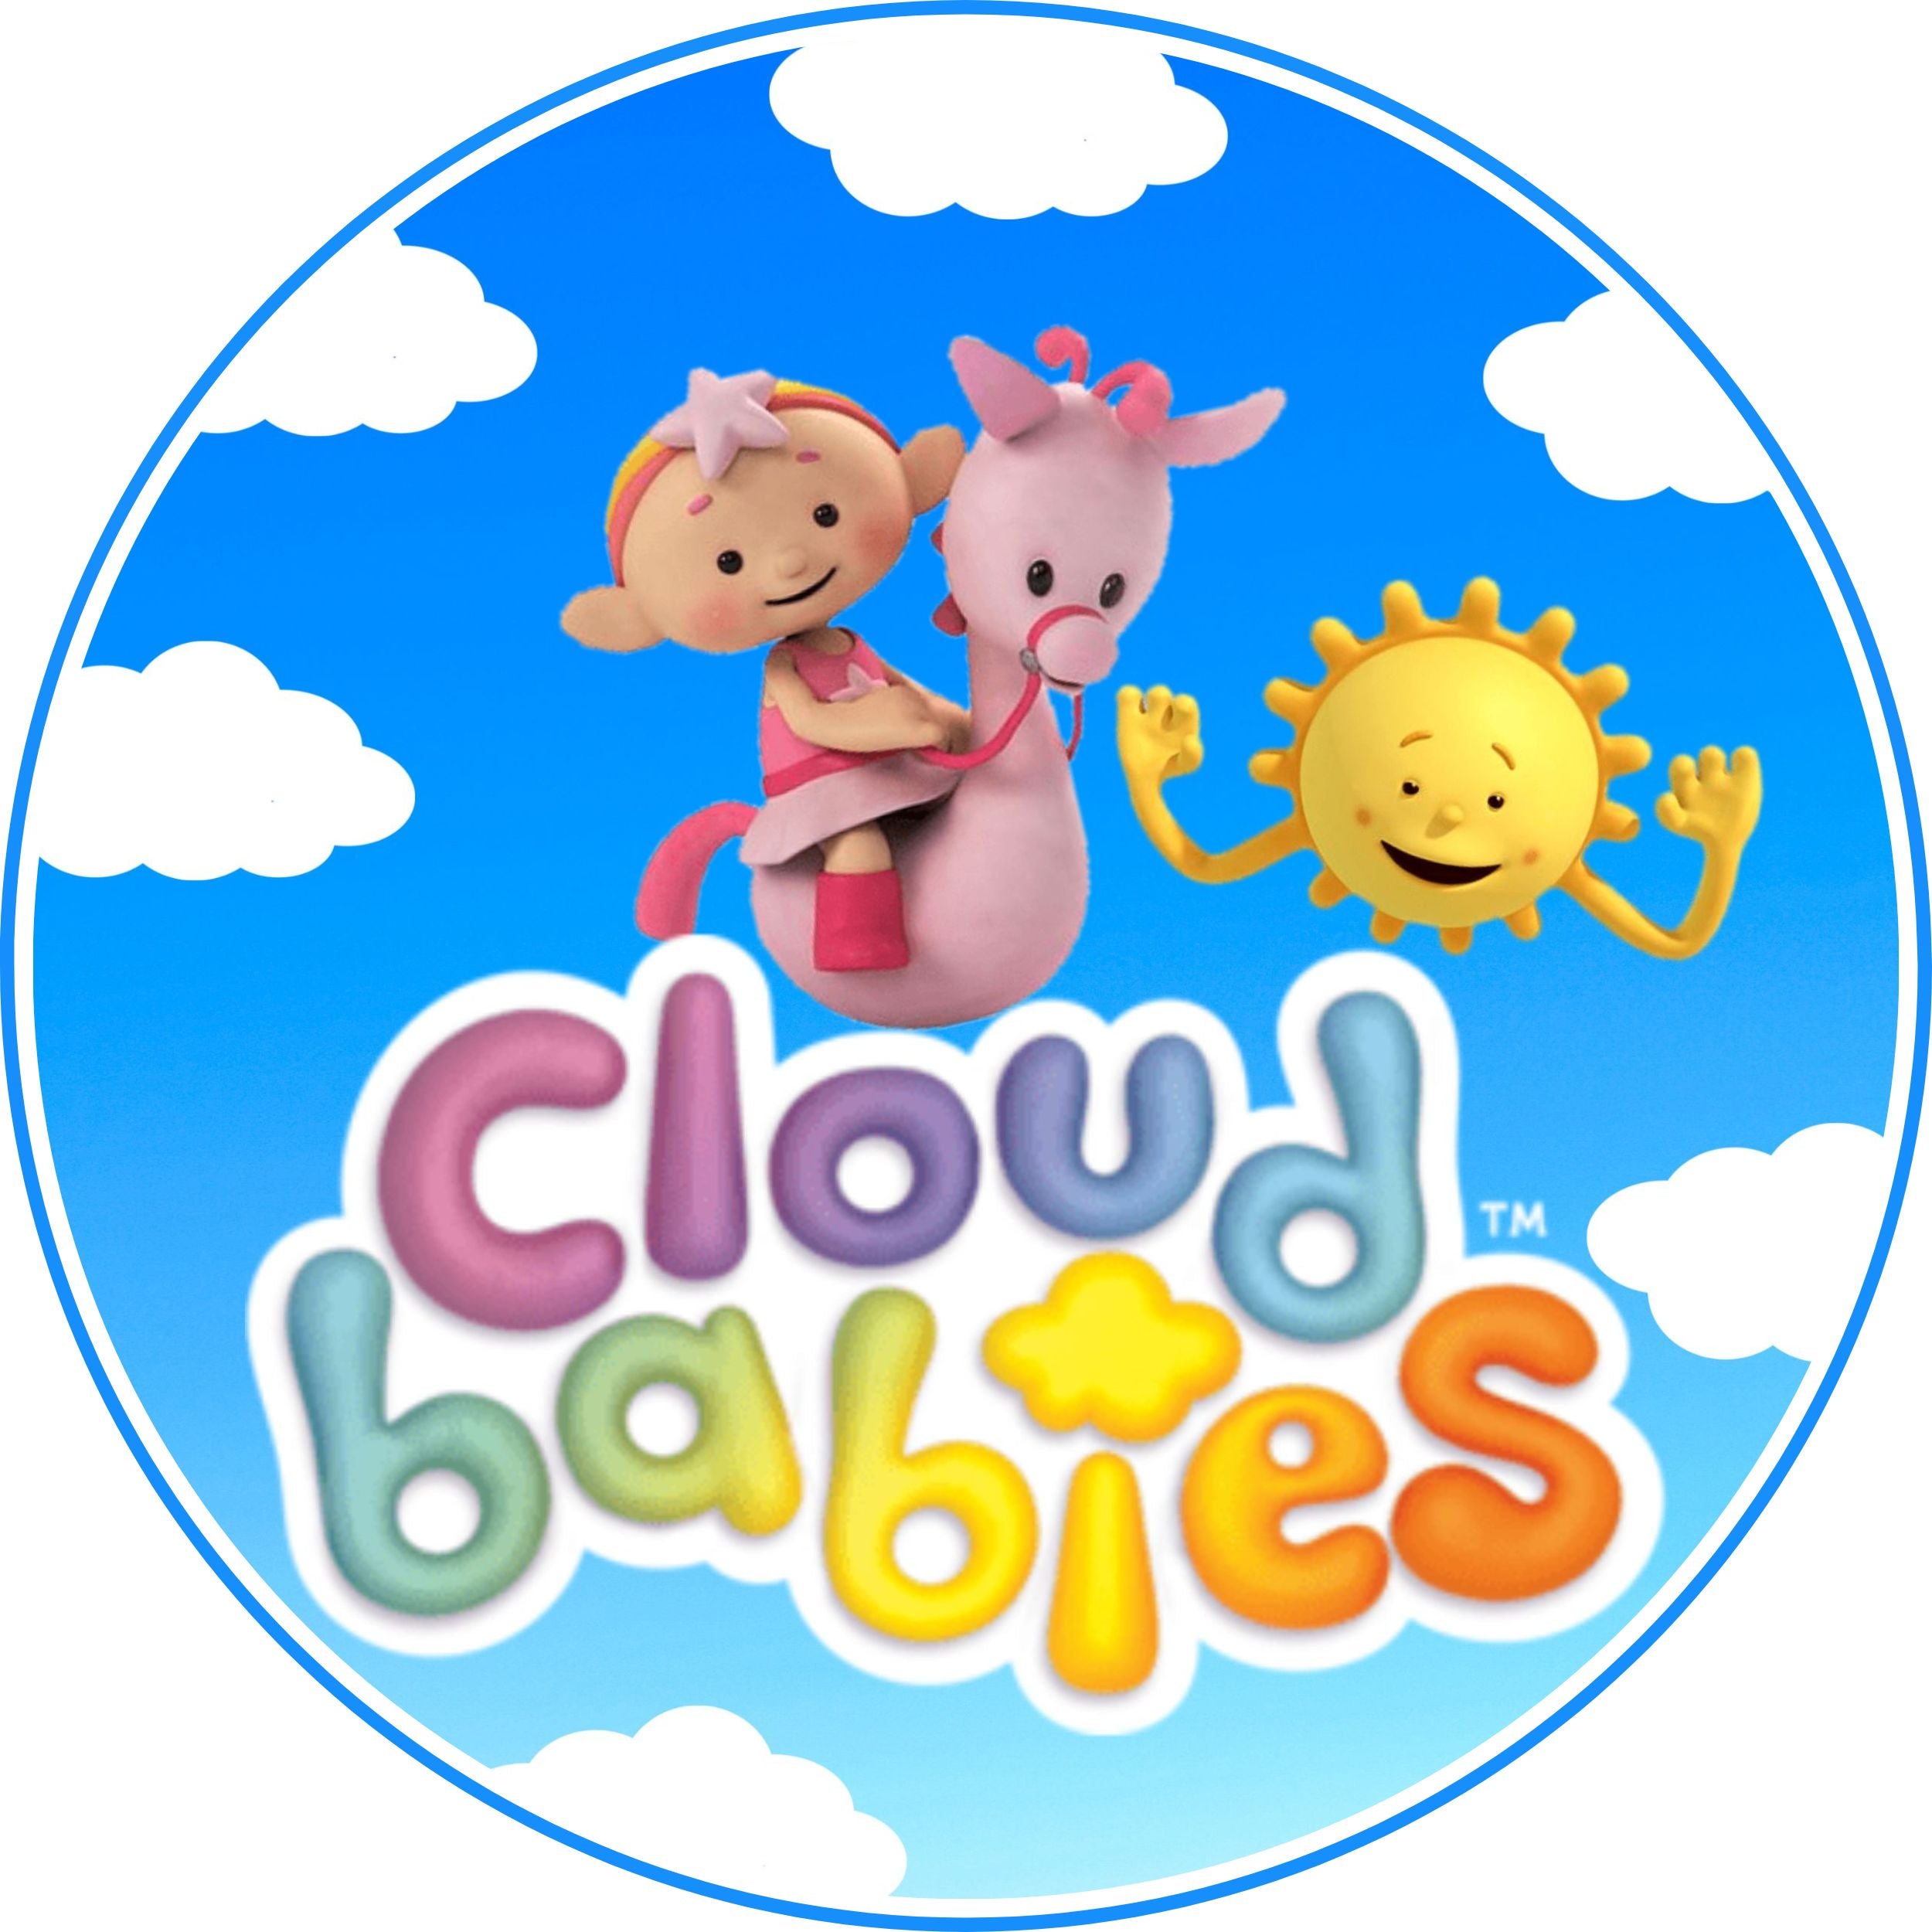 Cloud Babies Theme